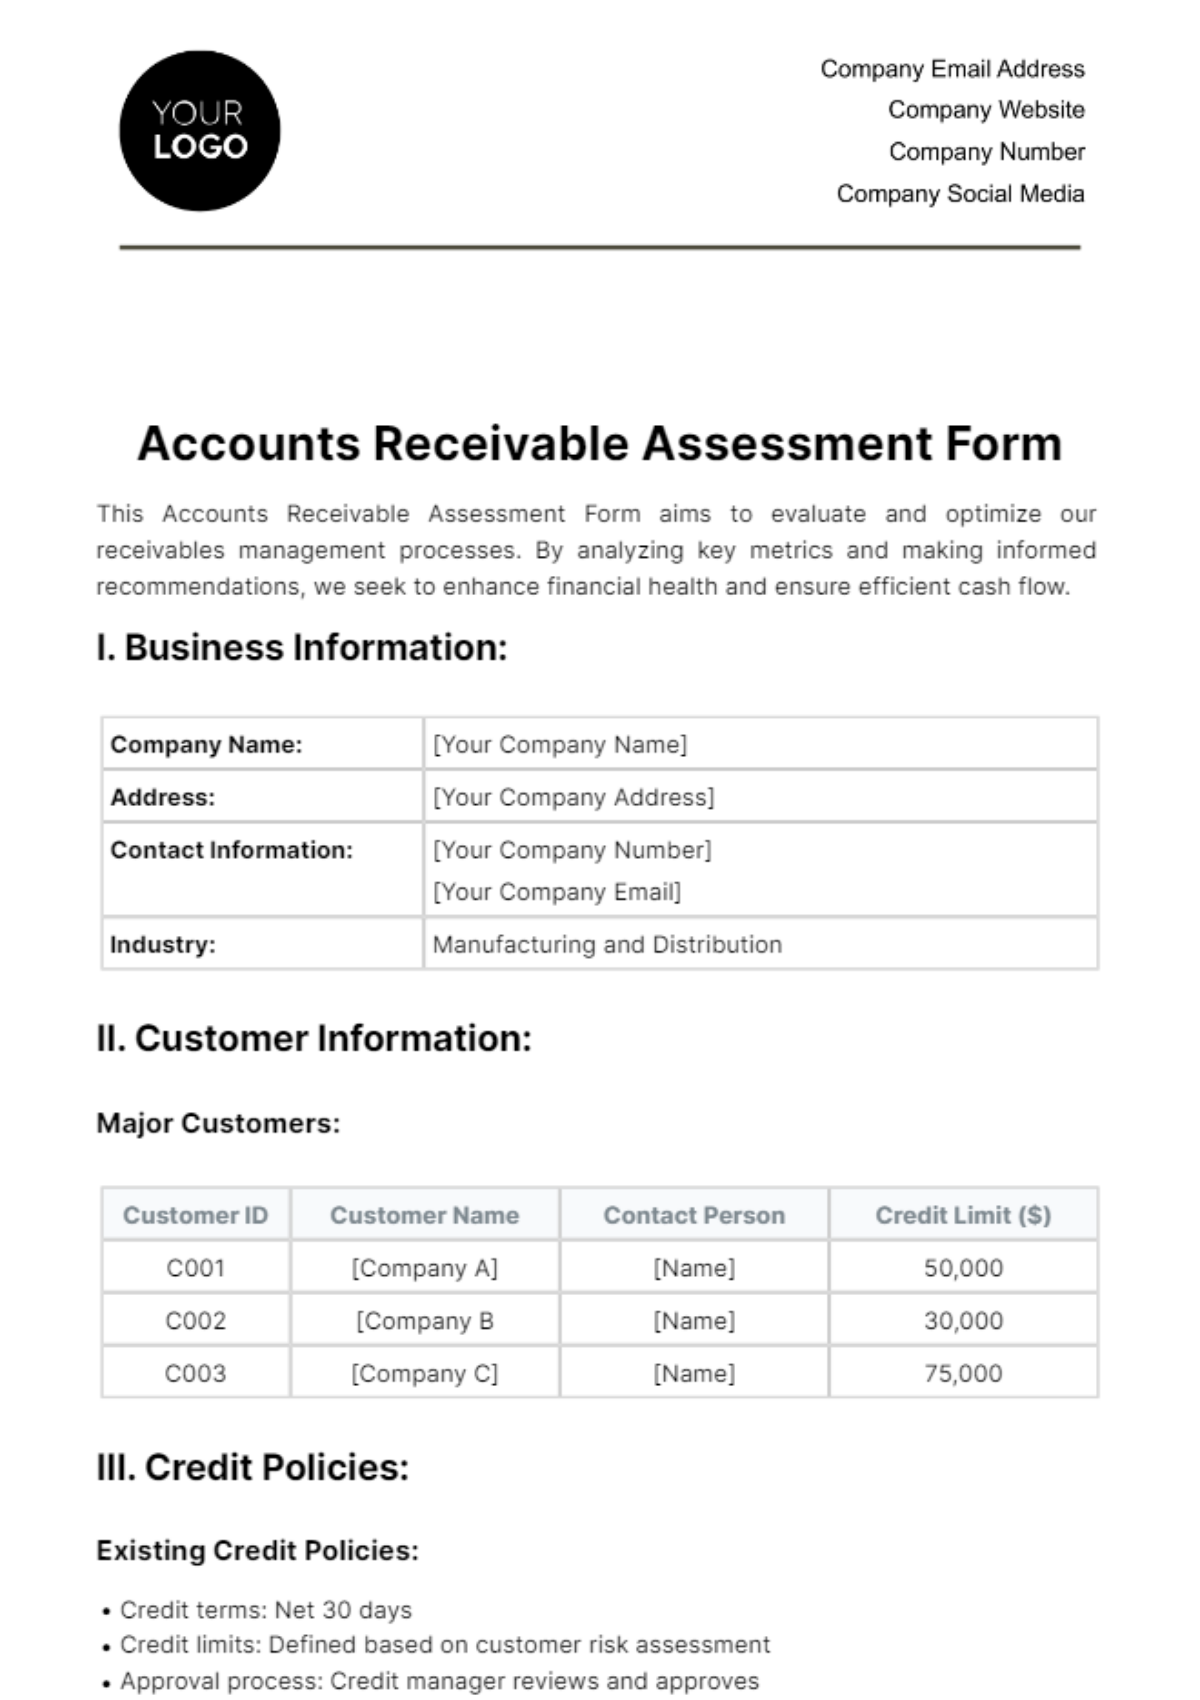 Accounts Receivable Assessment Form Template